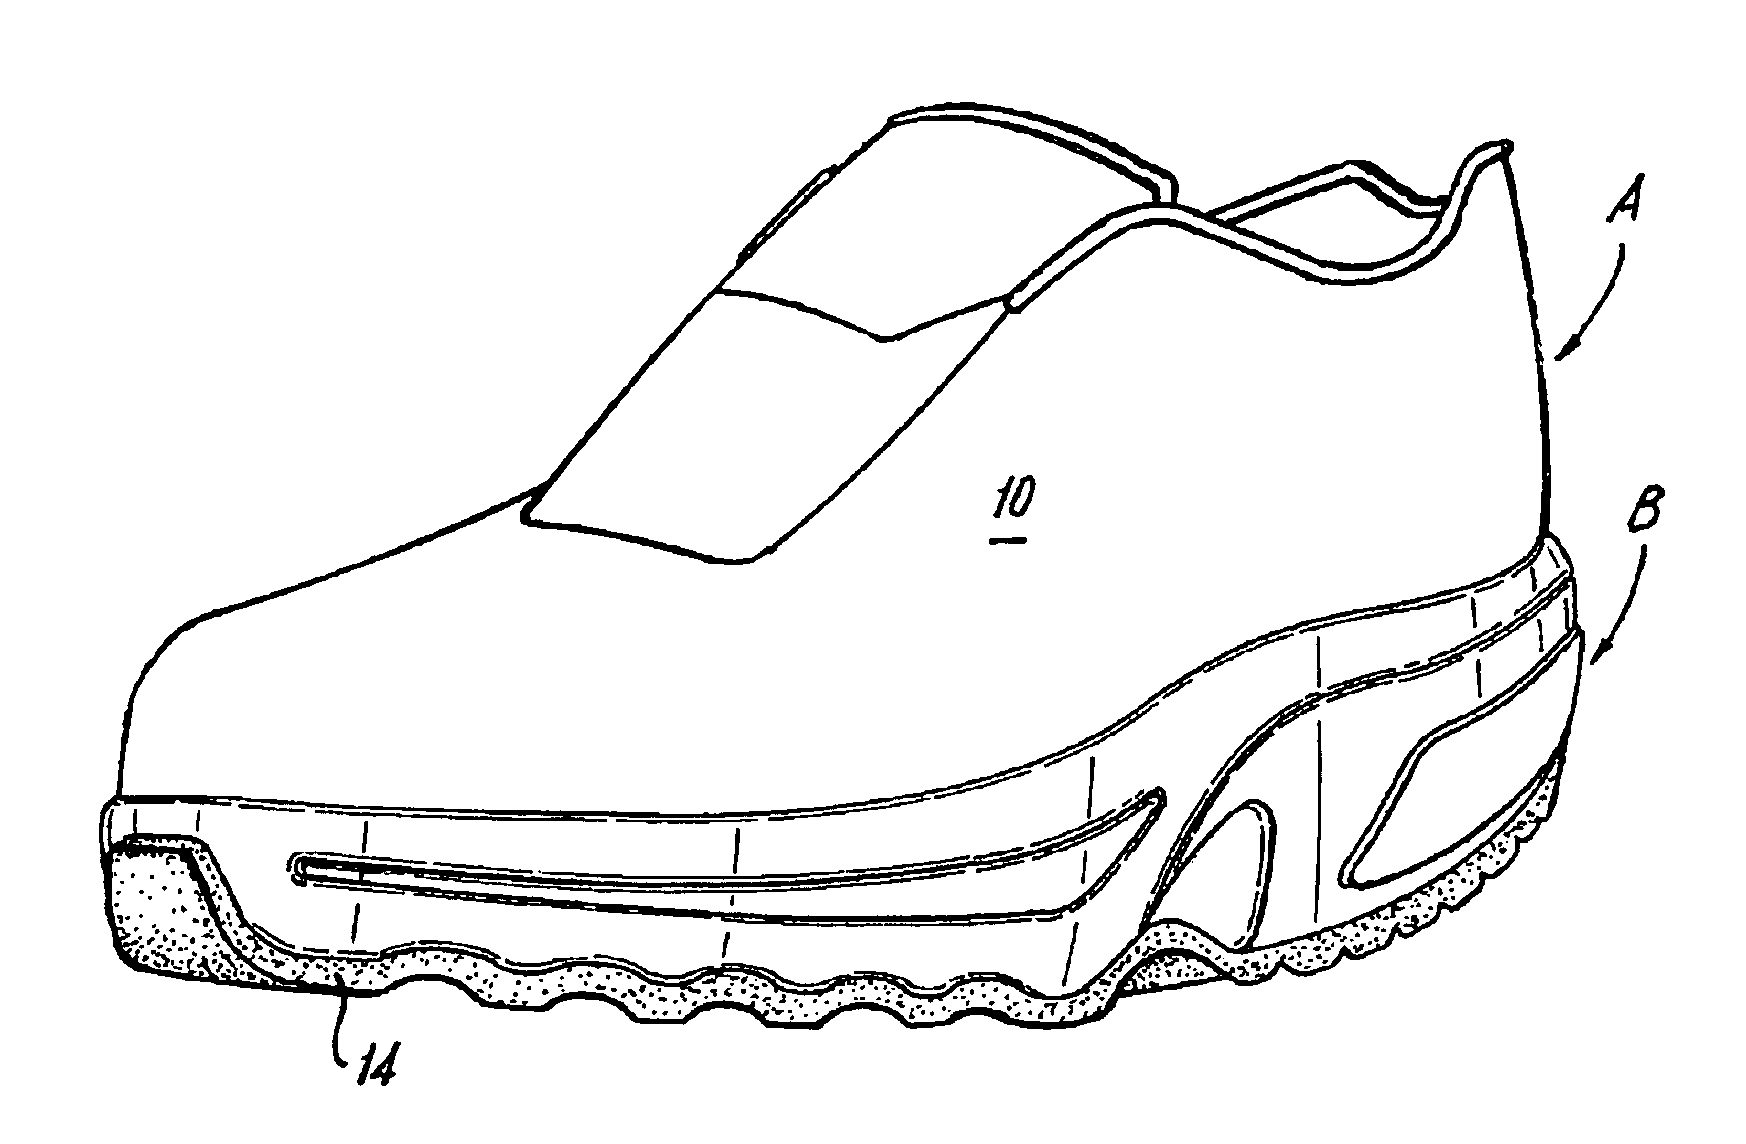 Dual-density EVA footwear mid-sole and method for making same